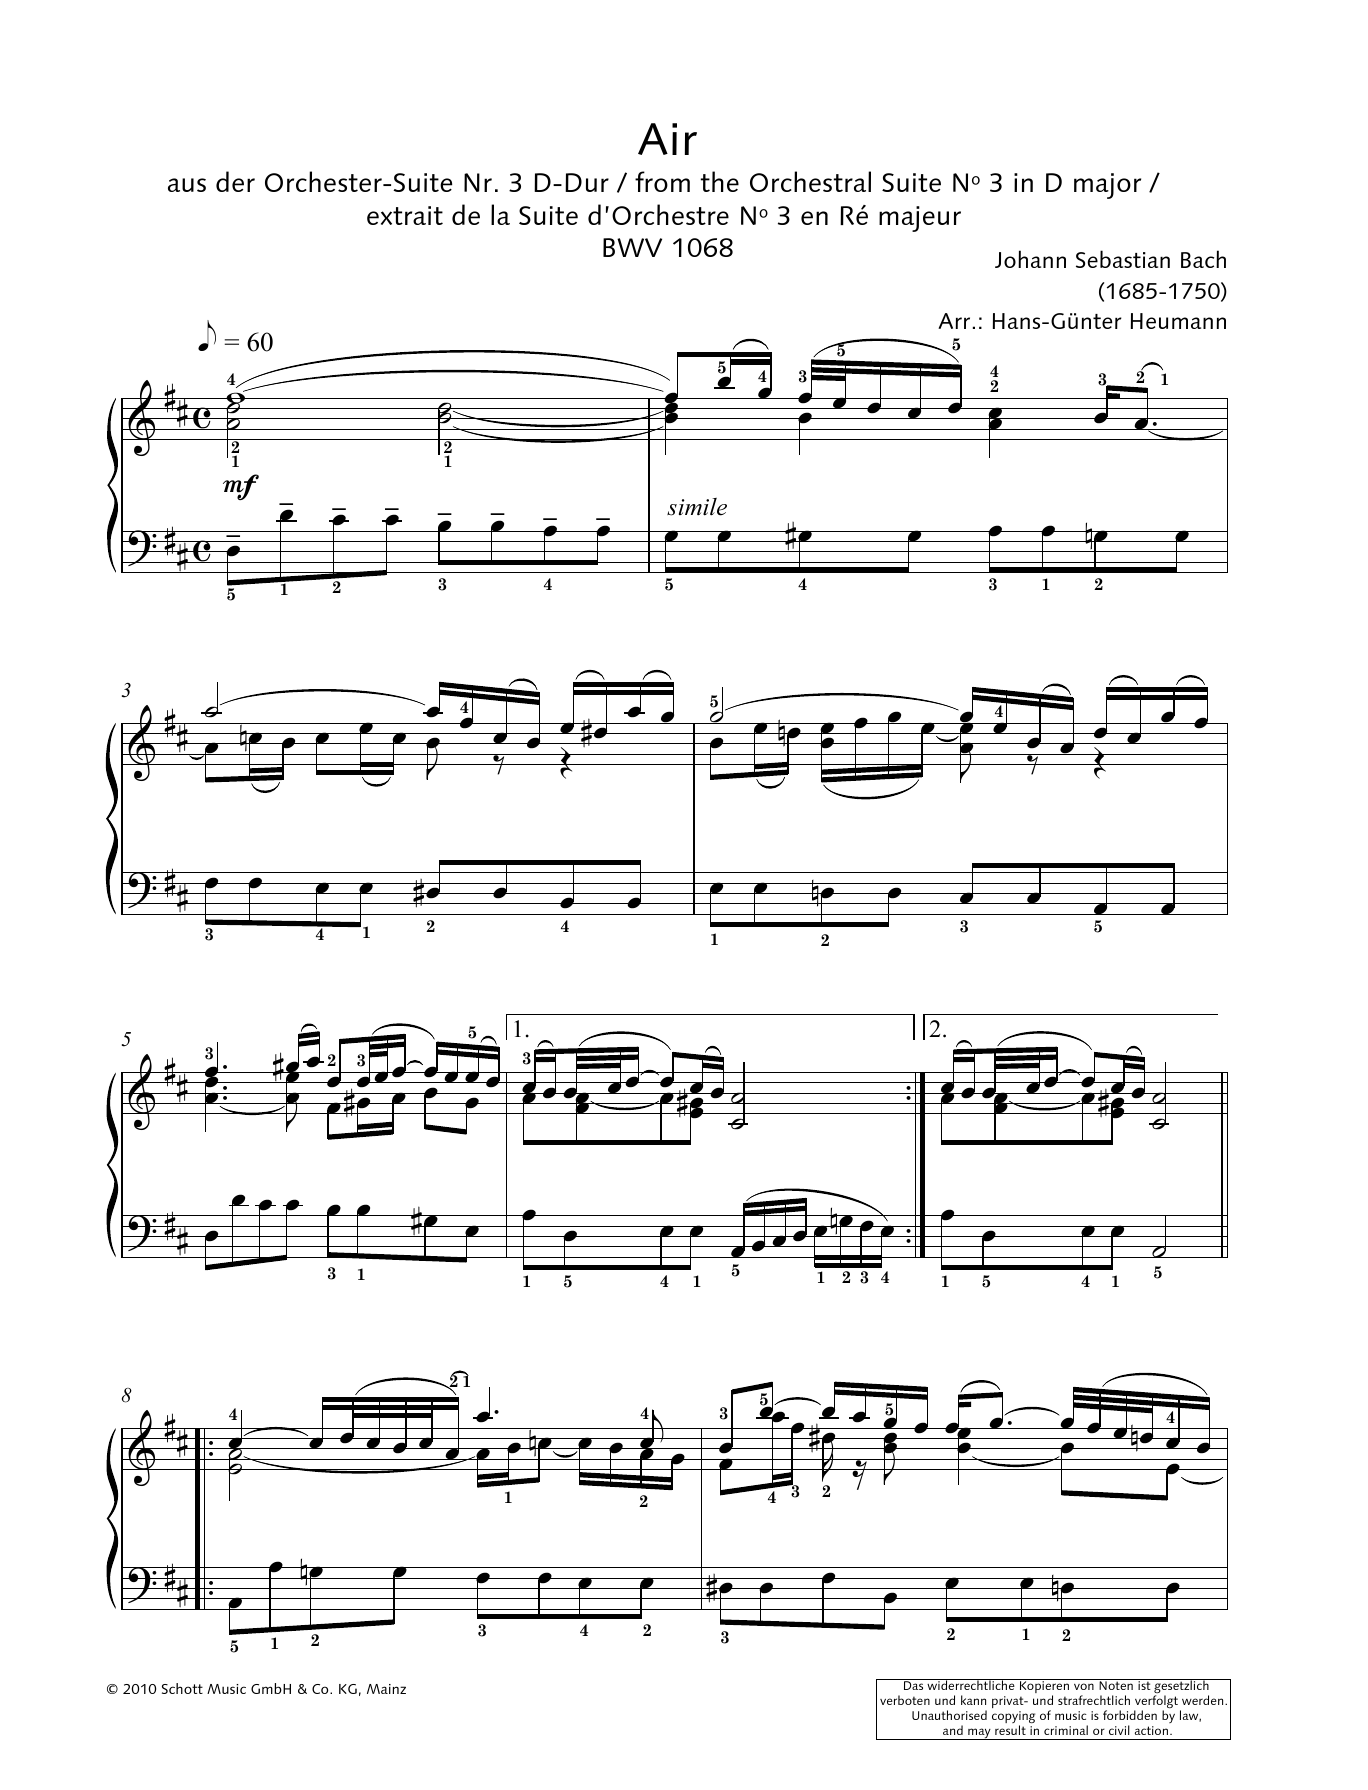 Johann Sebastian Bach Air Sheet Music Notes & Chords for Brass Solo - Download or Print PDF